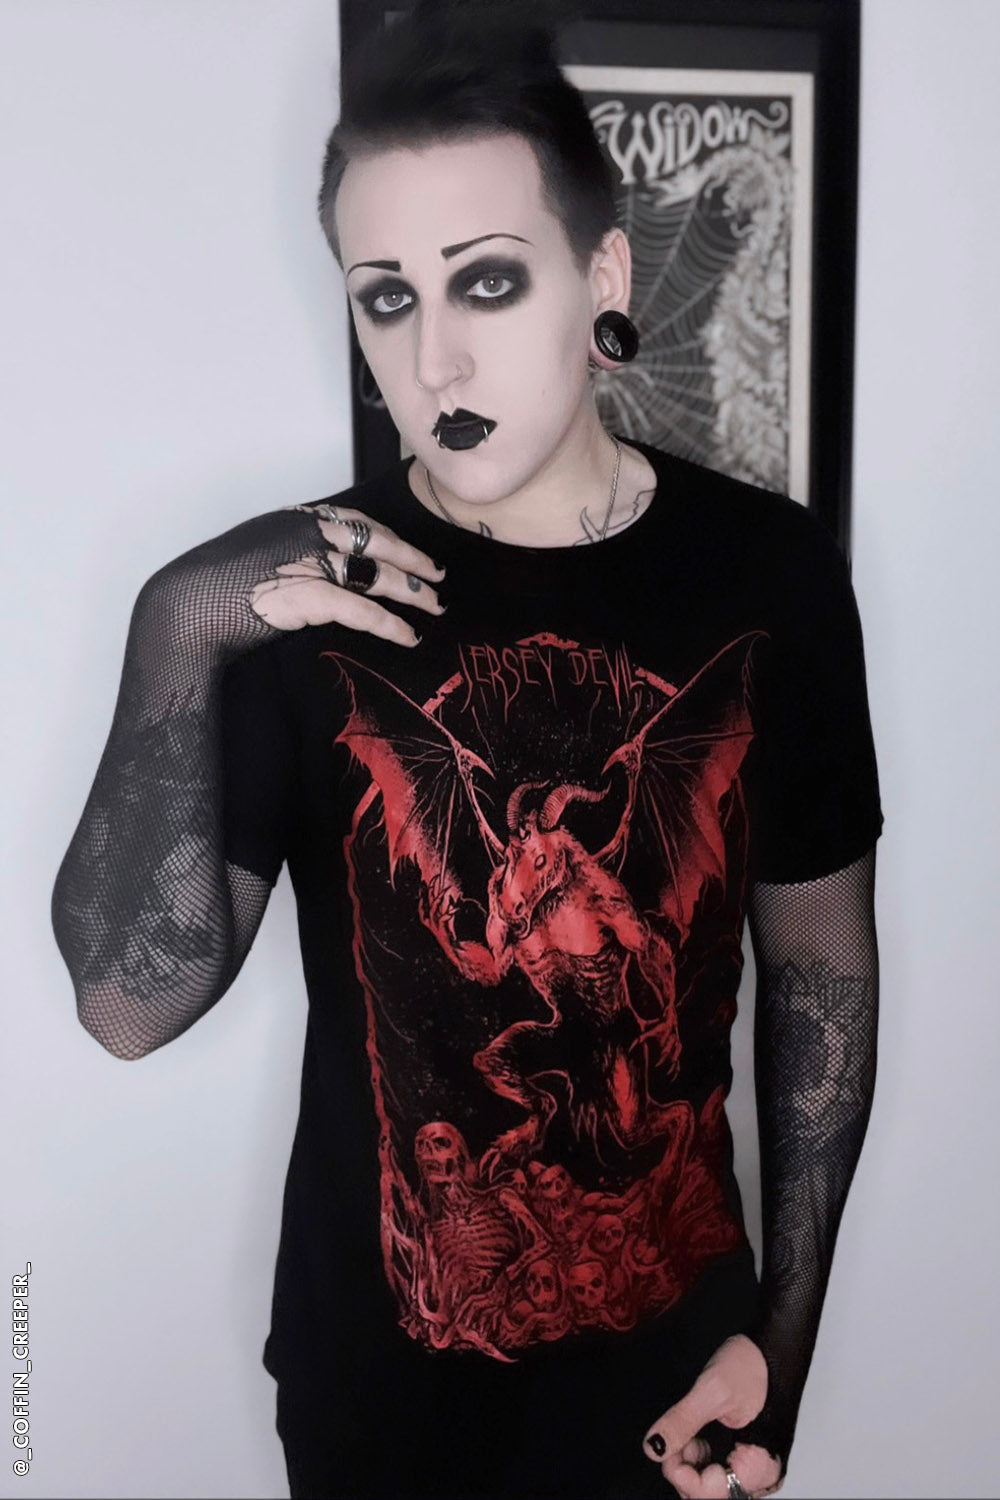 Jersey Devil T-shirt